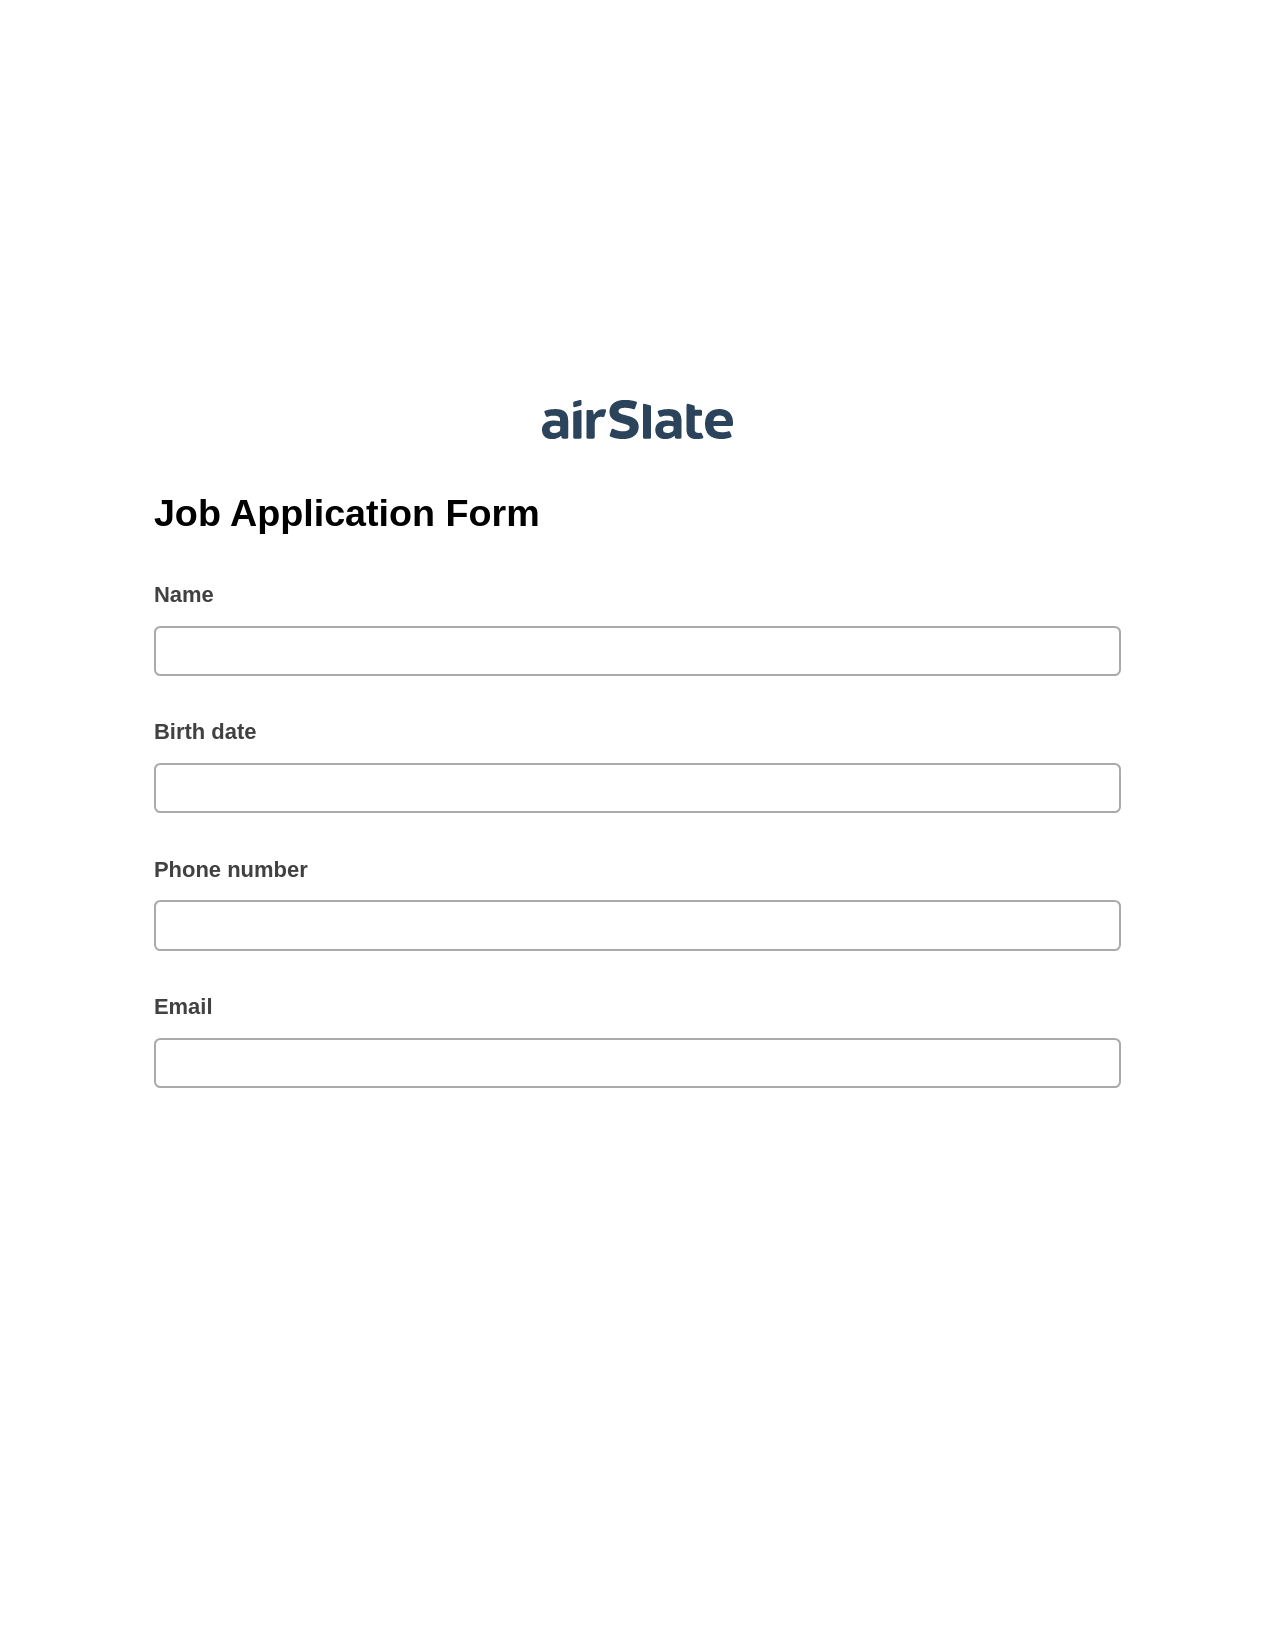 Job Application Form Pre-fill from MySQL Bot, Create MS Dynamics 365 Records Bot, Box Bot